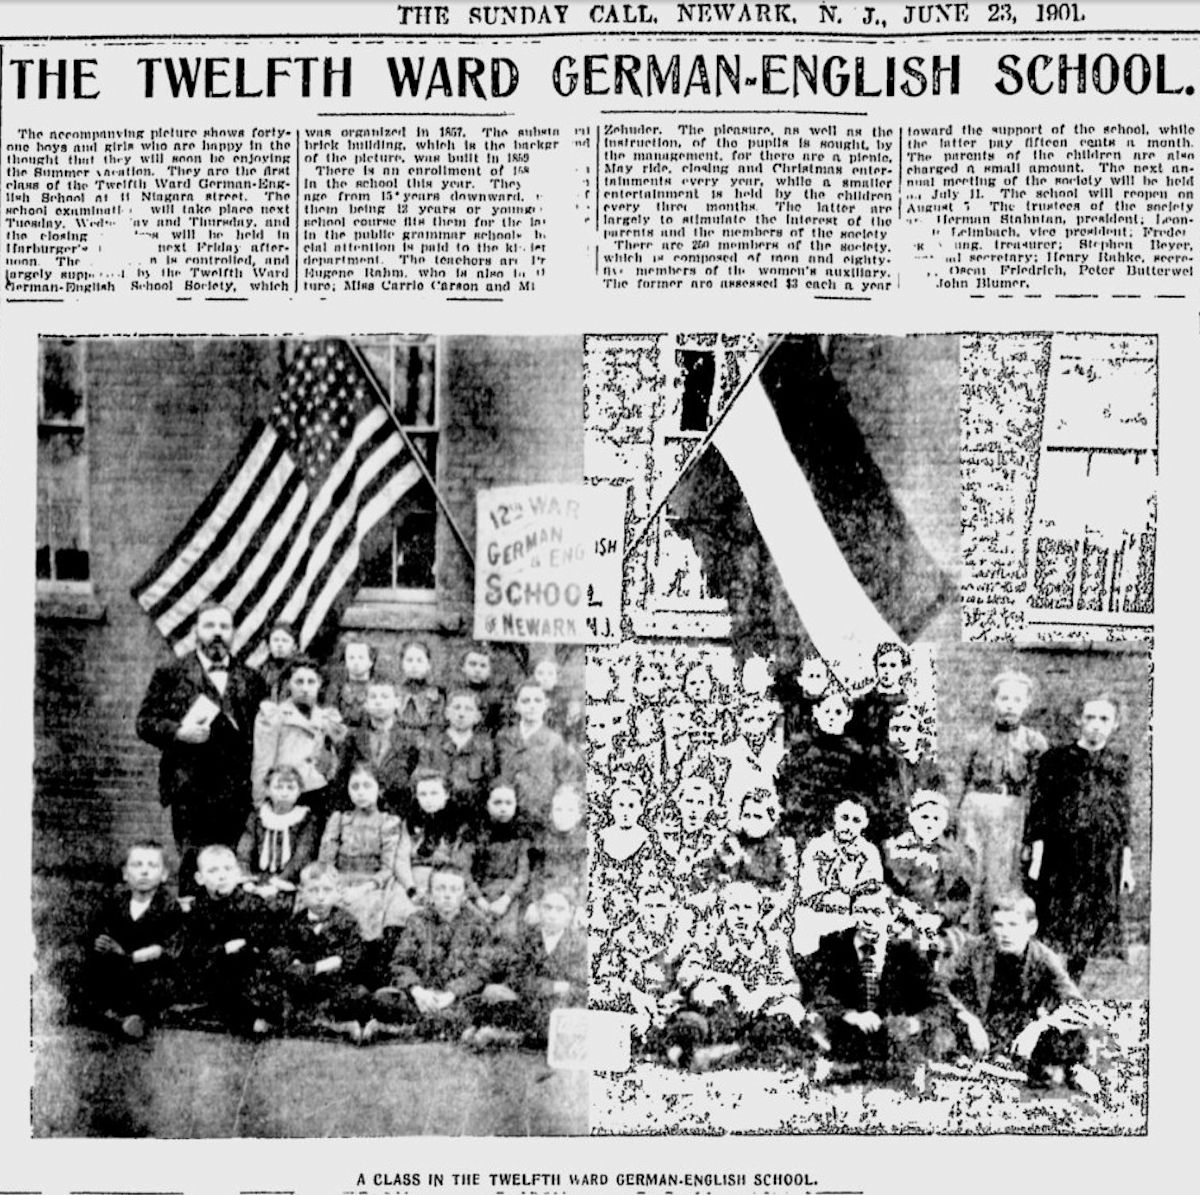 The Twelfth Ward German-English School
June 23, 1901
